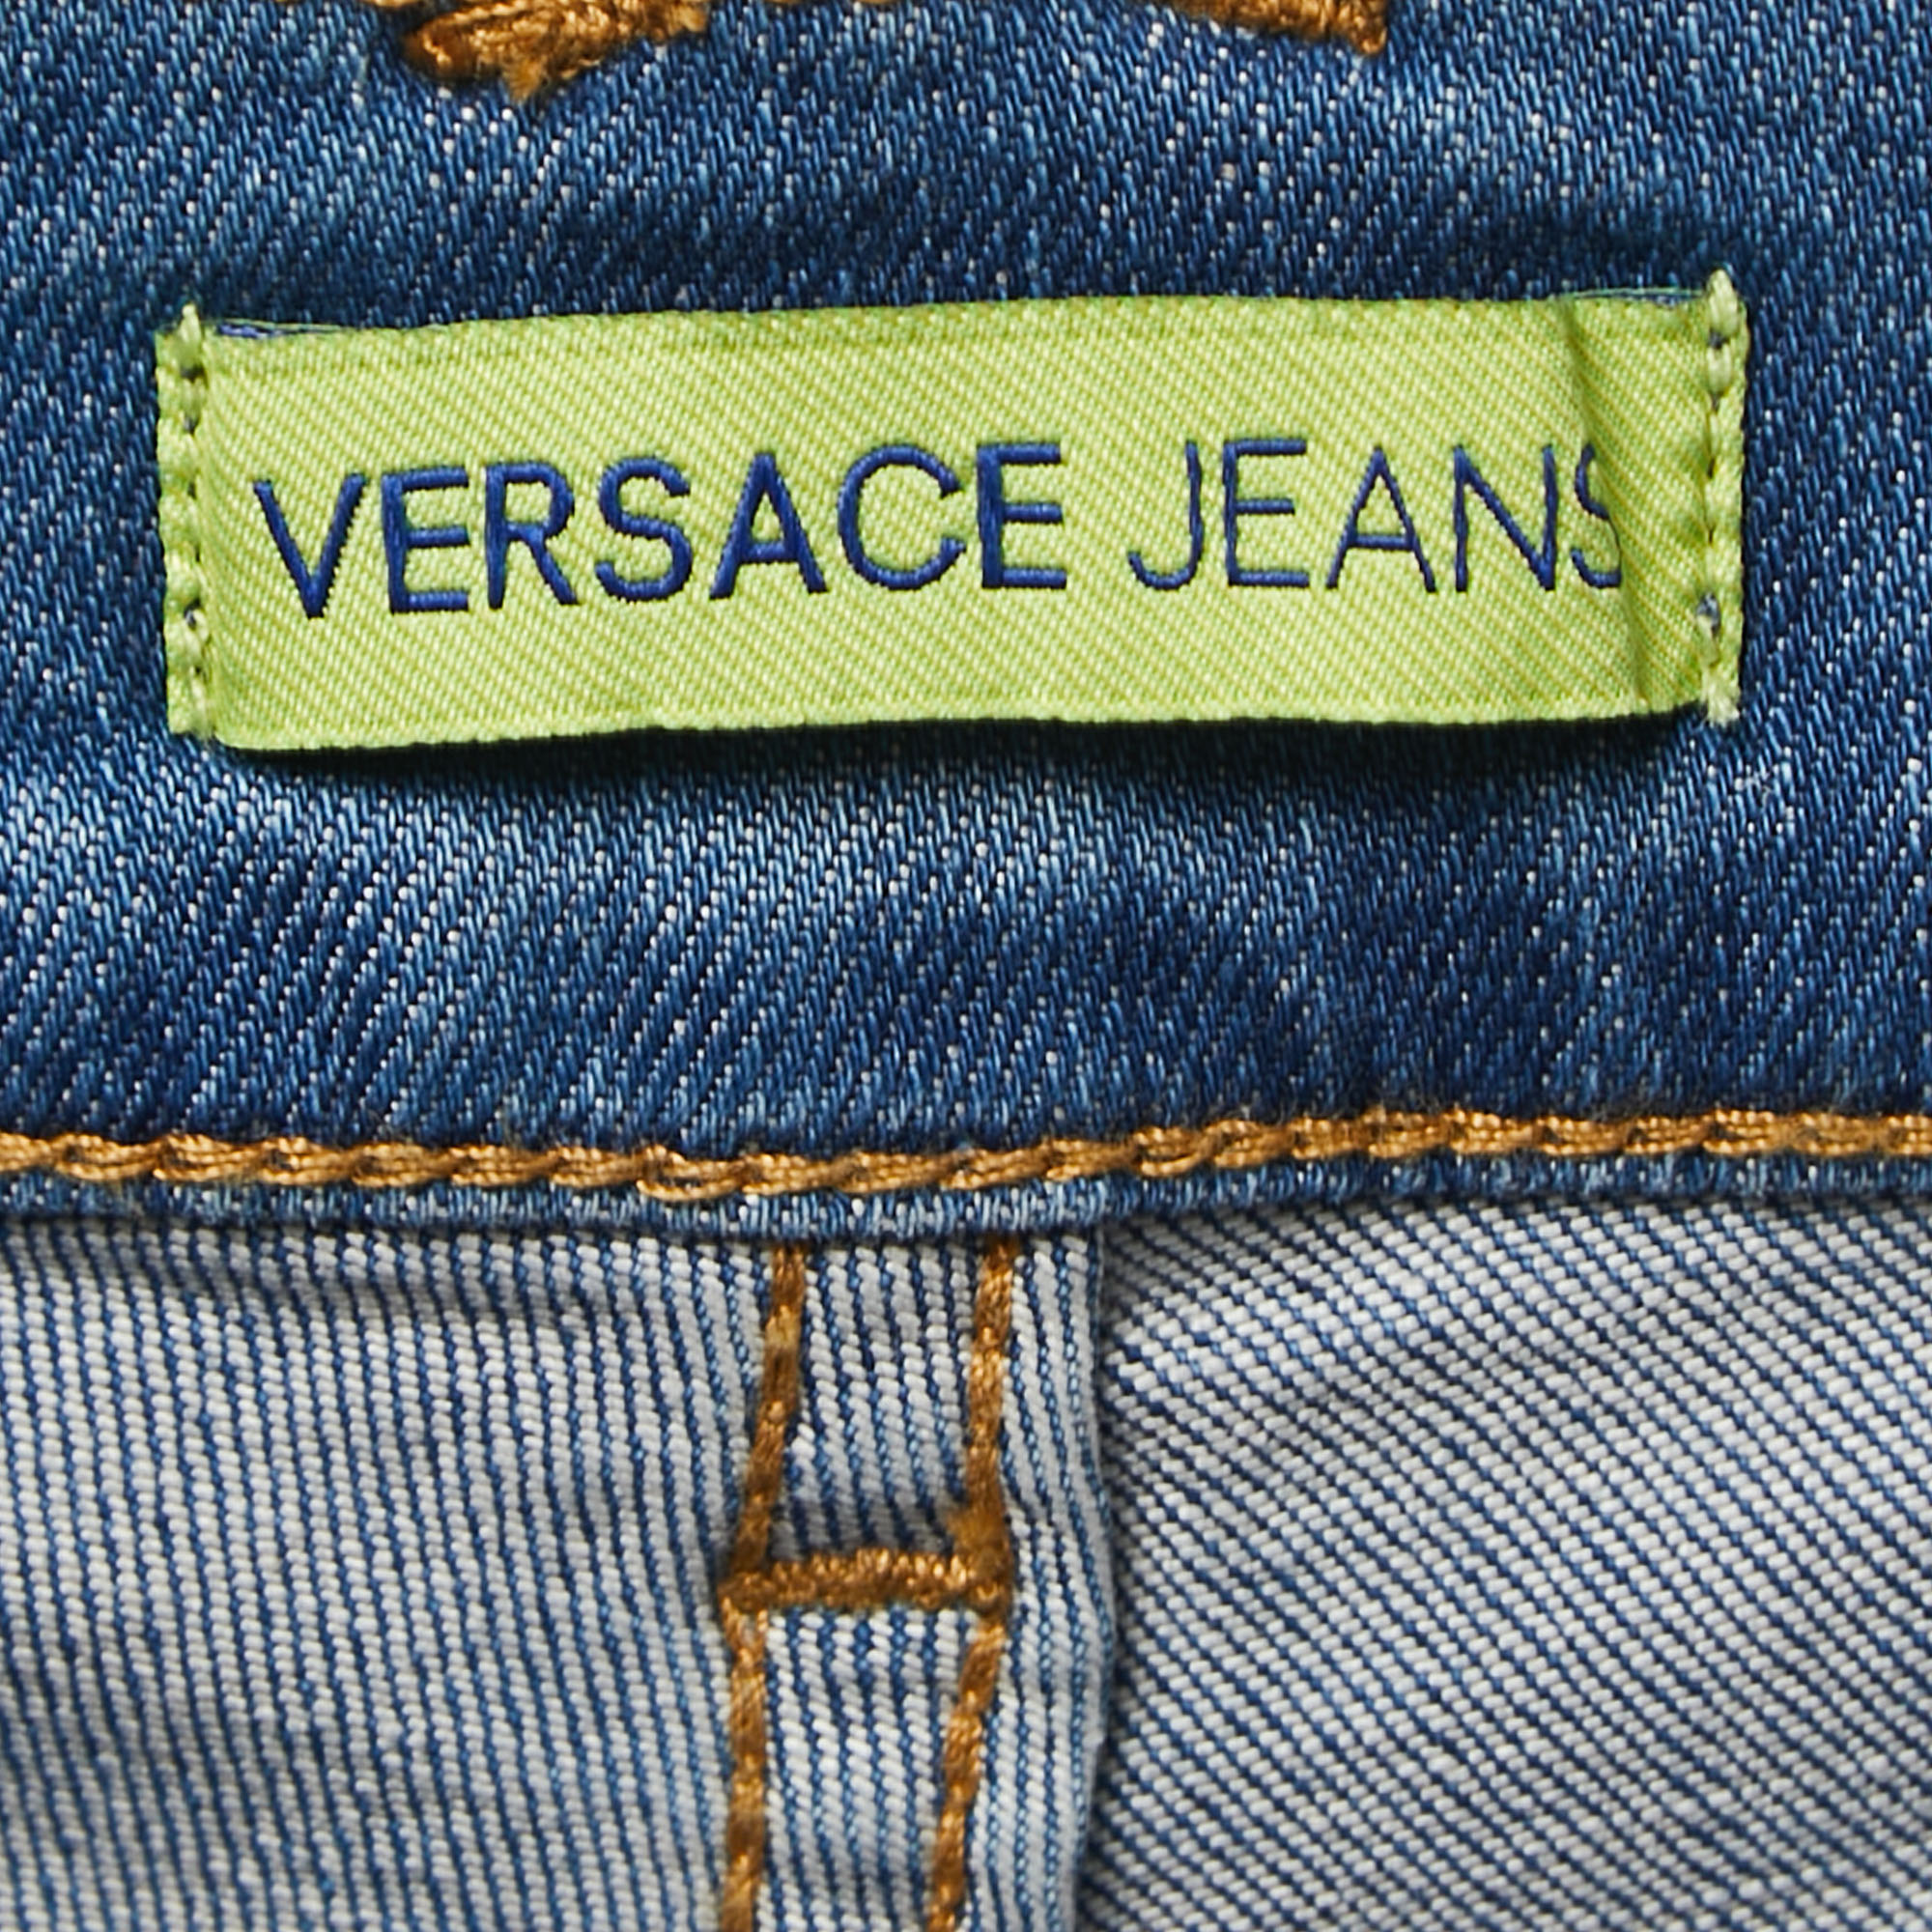 Versace Jeans Blue Washed Denim Skinny Jeans S Waist 28